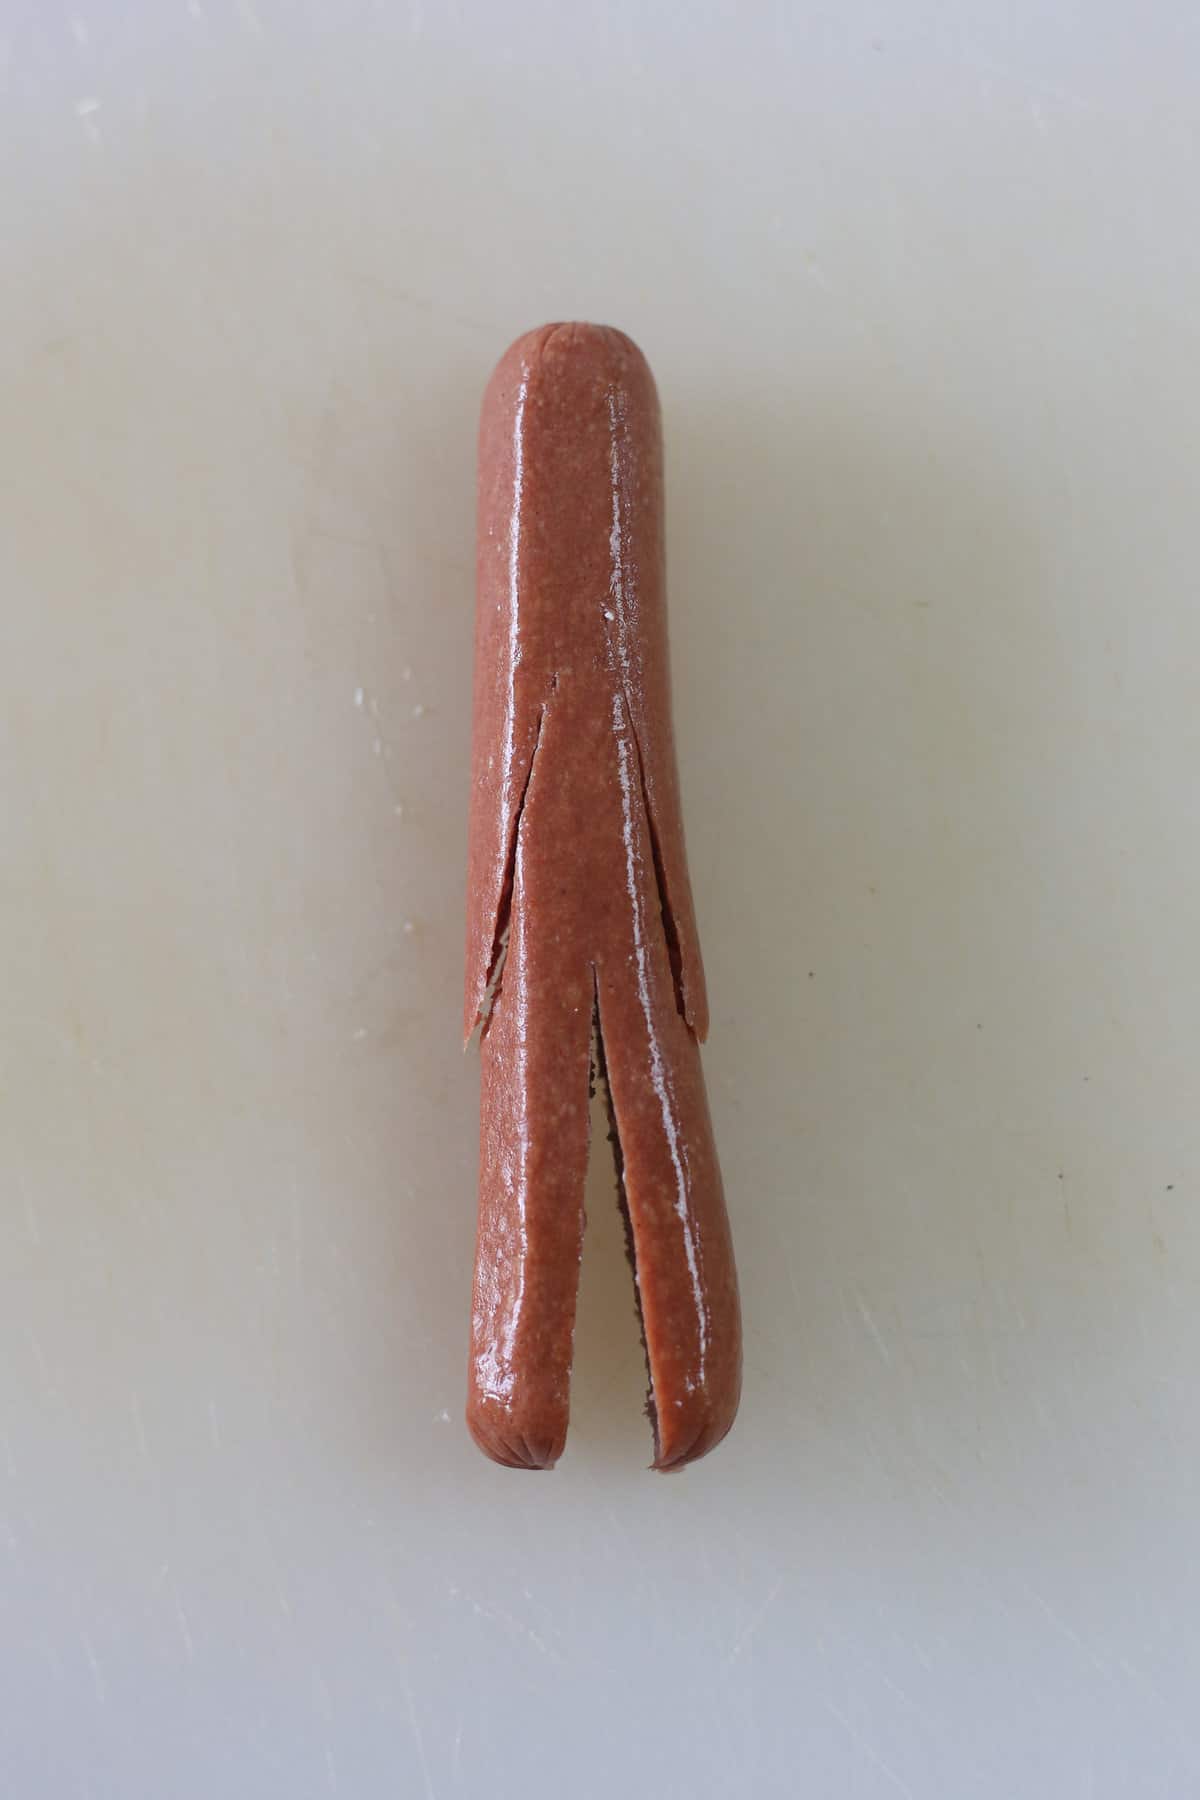 A hot dog cut to look like a mummy. 